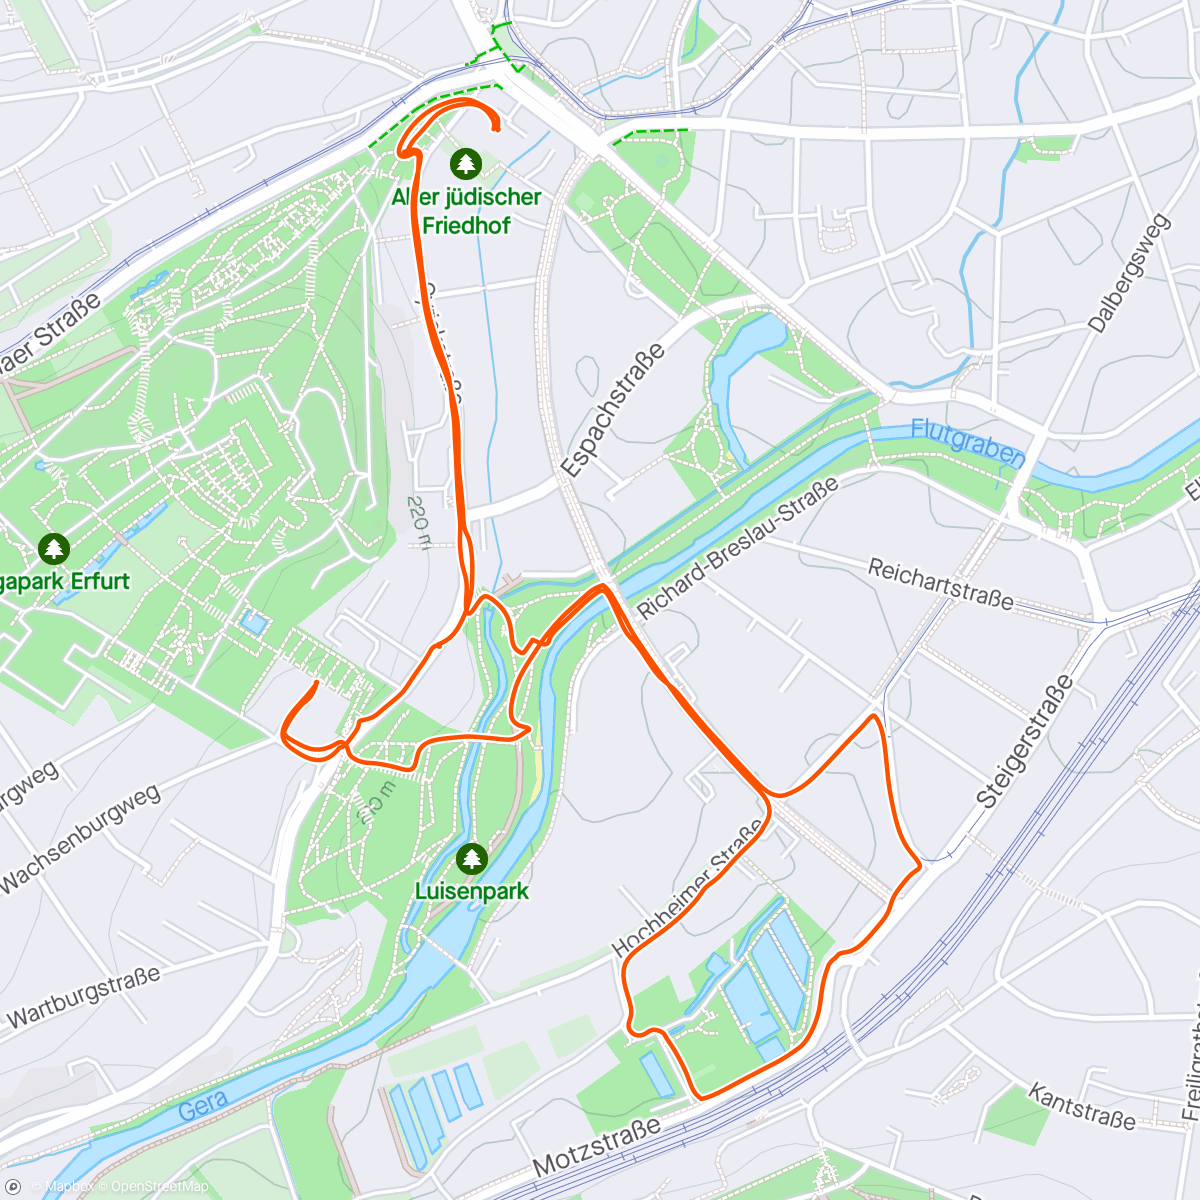 Карта физической активности (Spaziergang am Nachmittag)